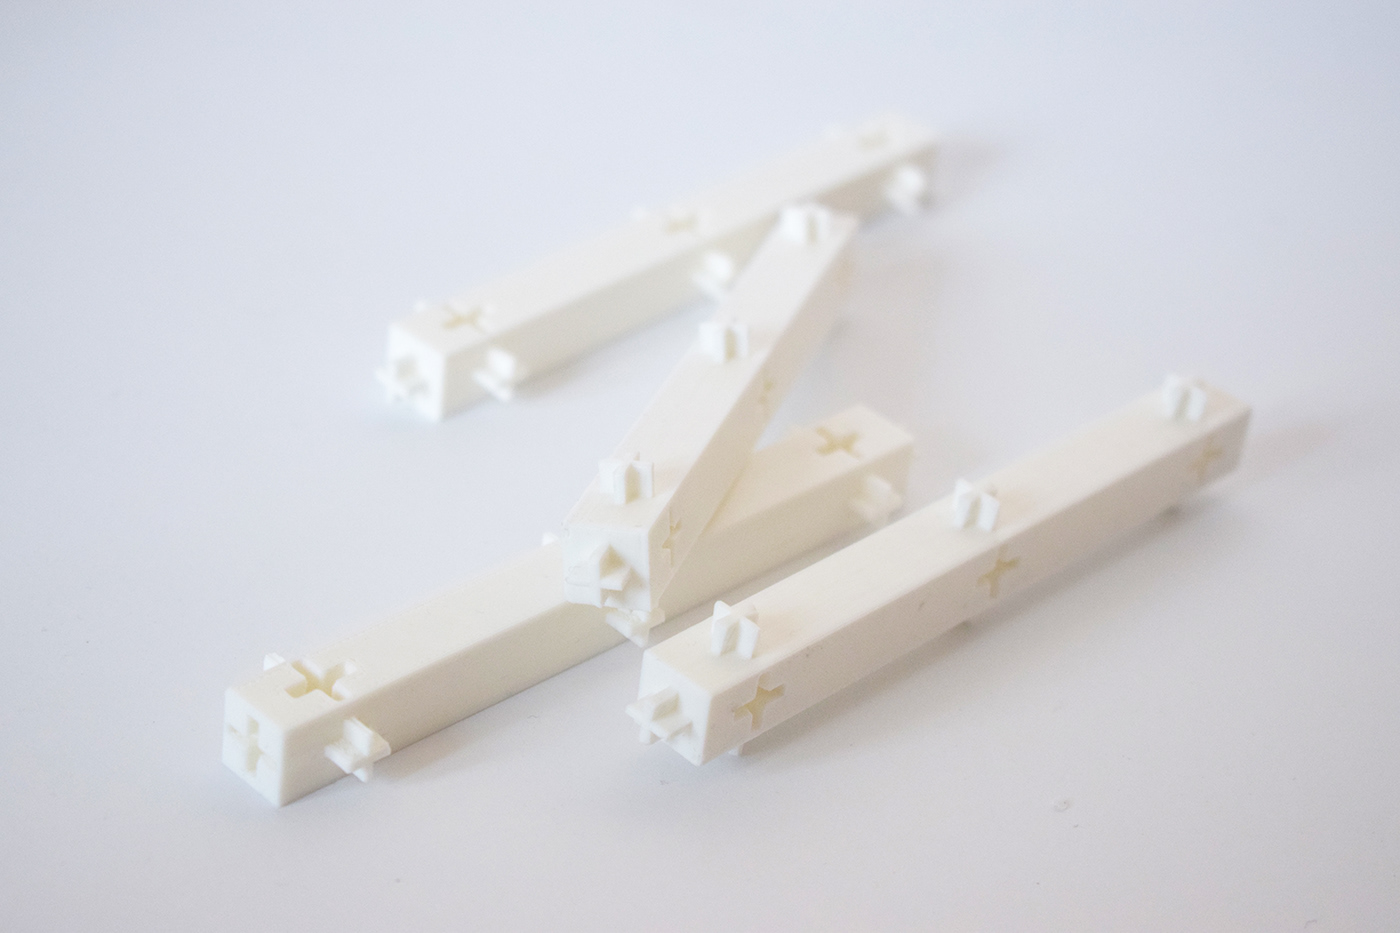 design 3Dprinter joint design